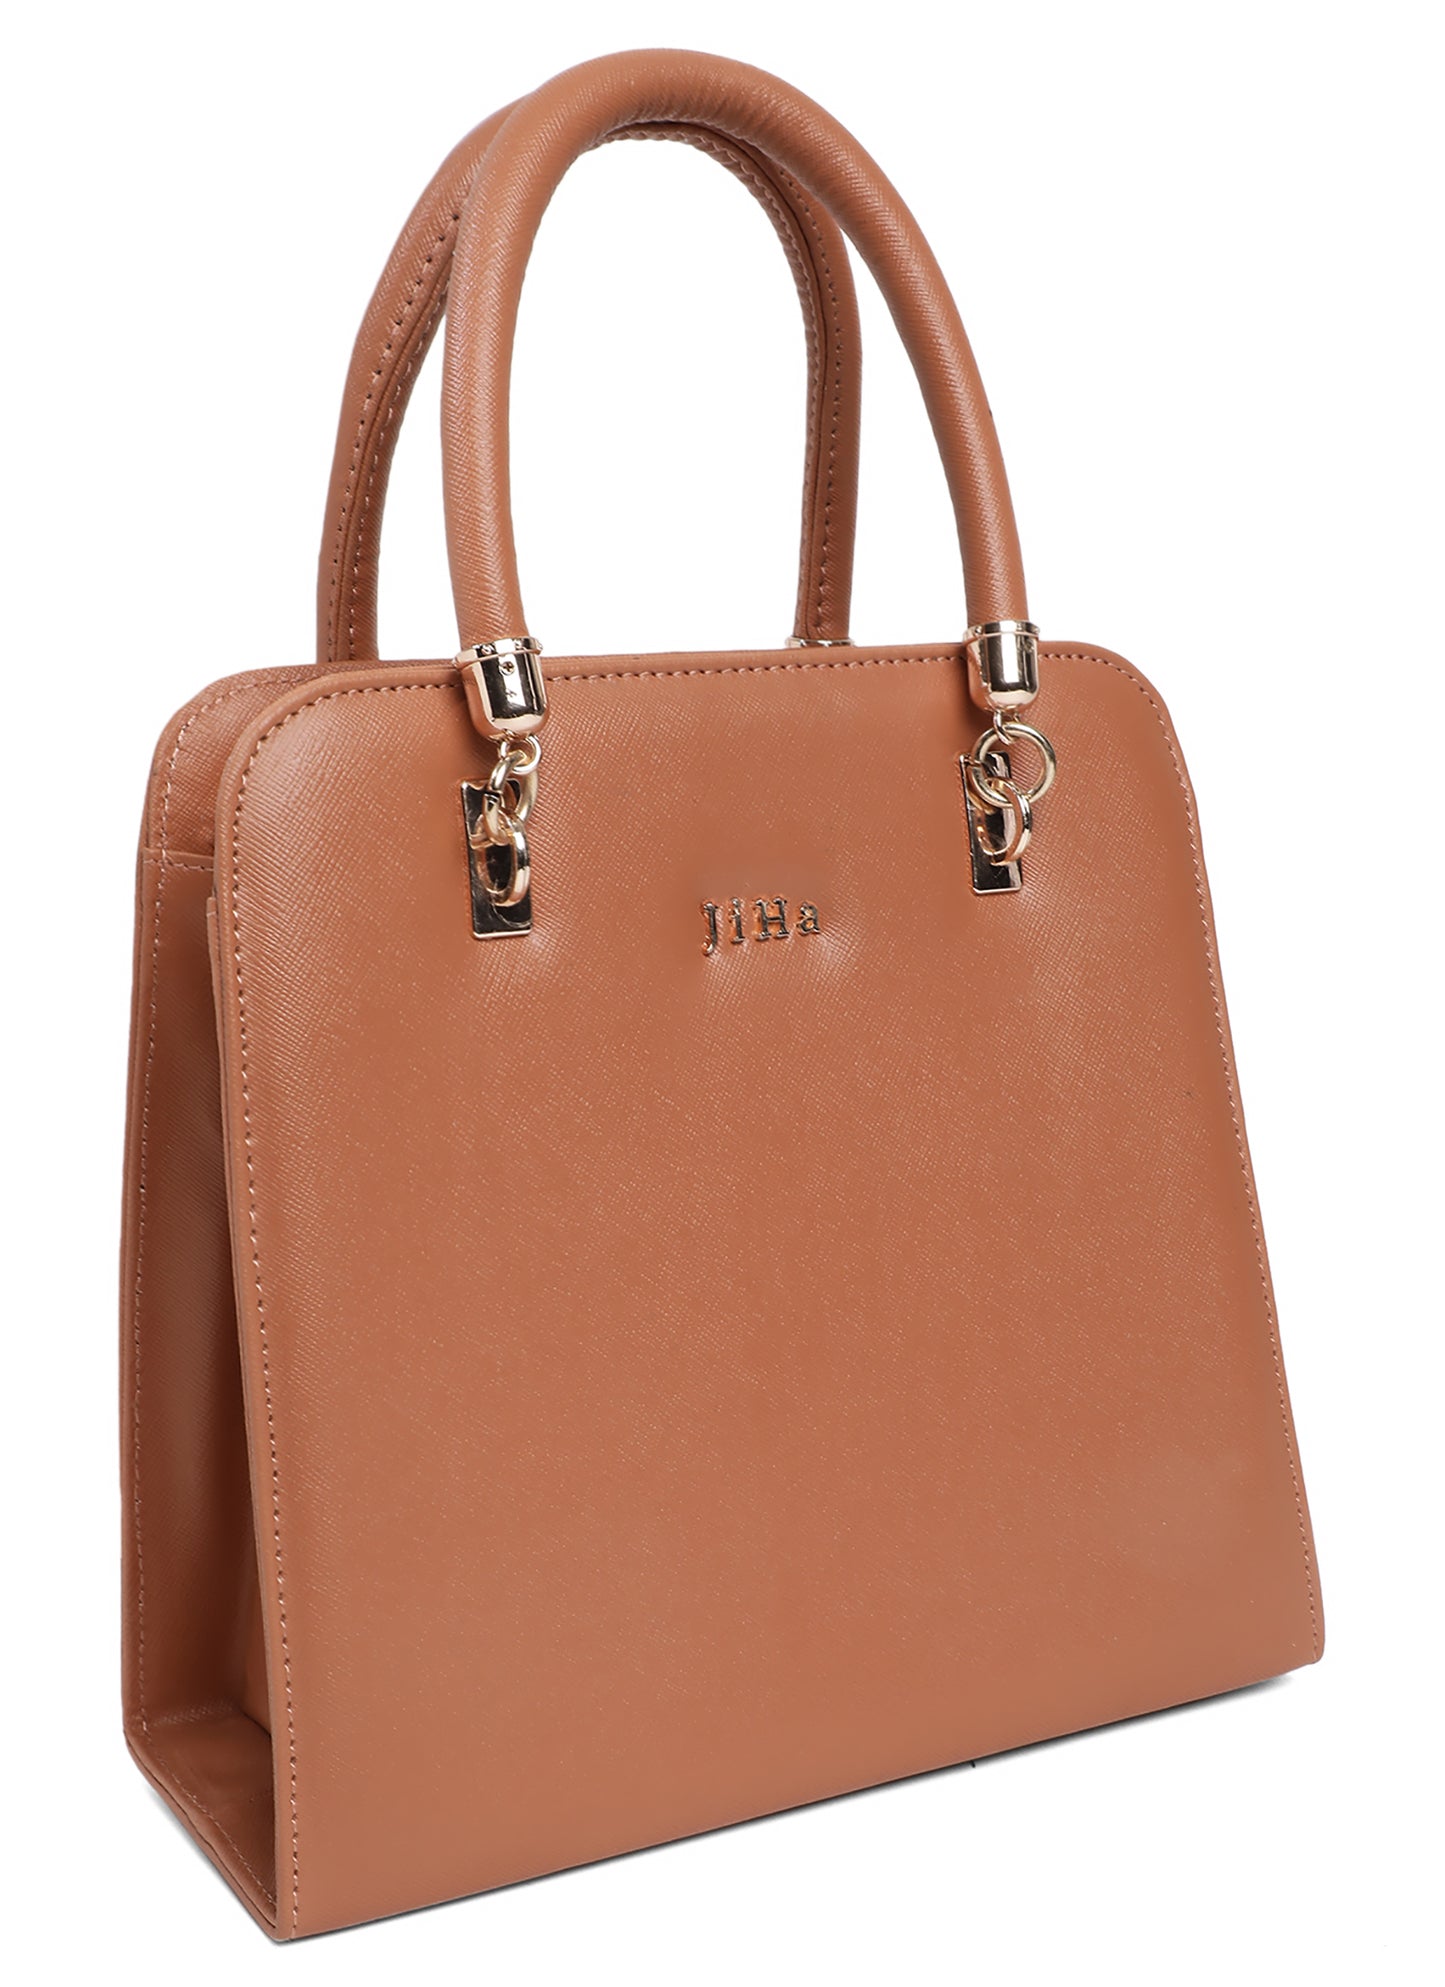 Jiha Faux Leather Tan Box Satchel Hand Bag / Sling Bag